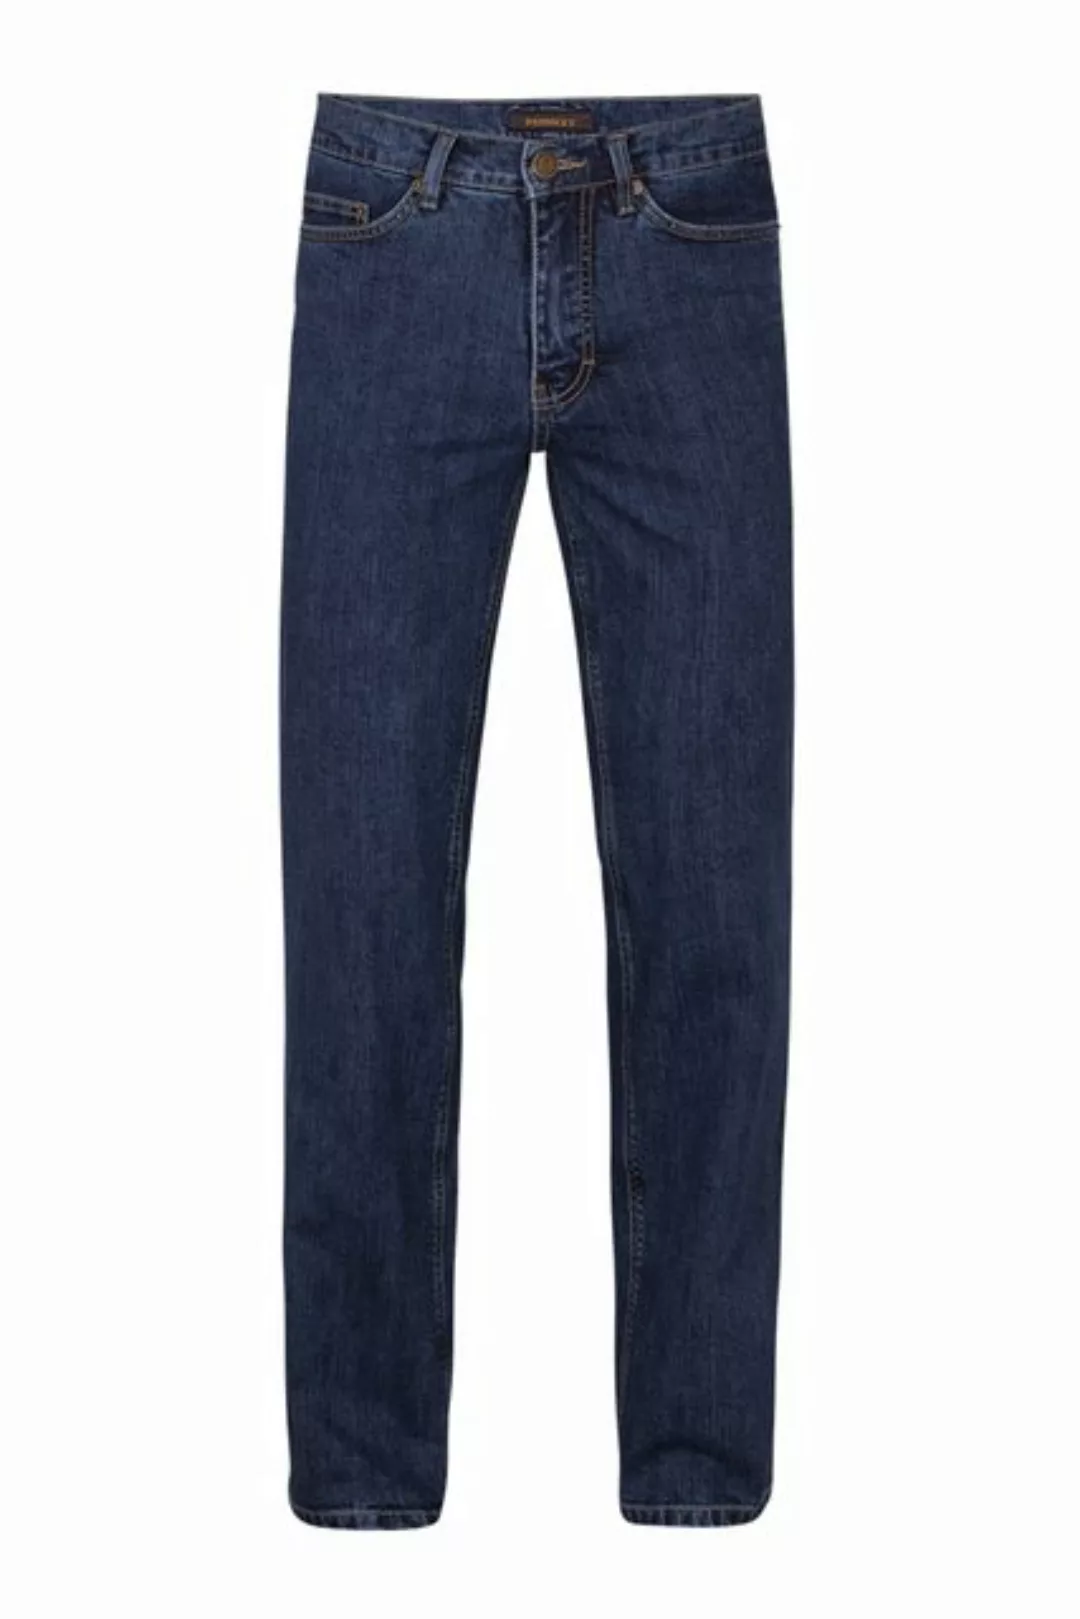 Paddock's 5-Pocket-Jeans PADDOCKS RANGER dark blue stone 80253 1628.4480 günstig online kaufen